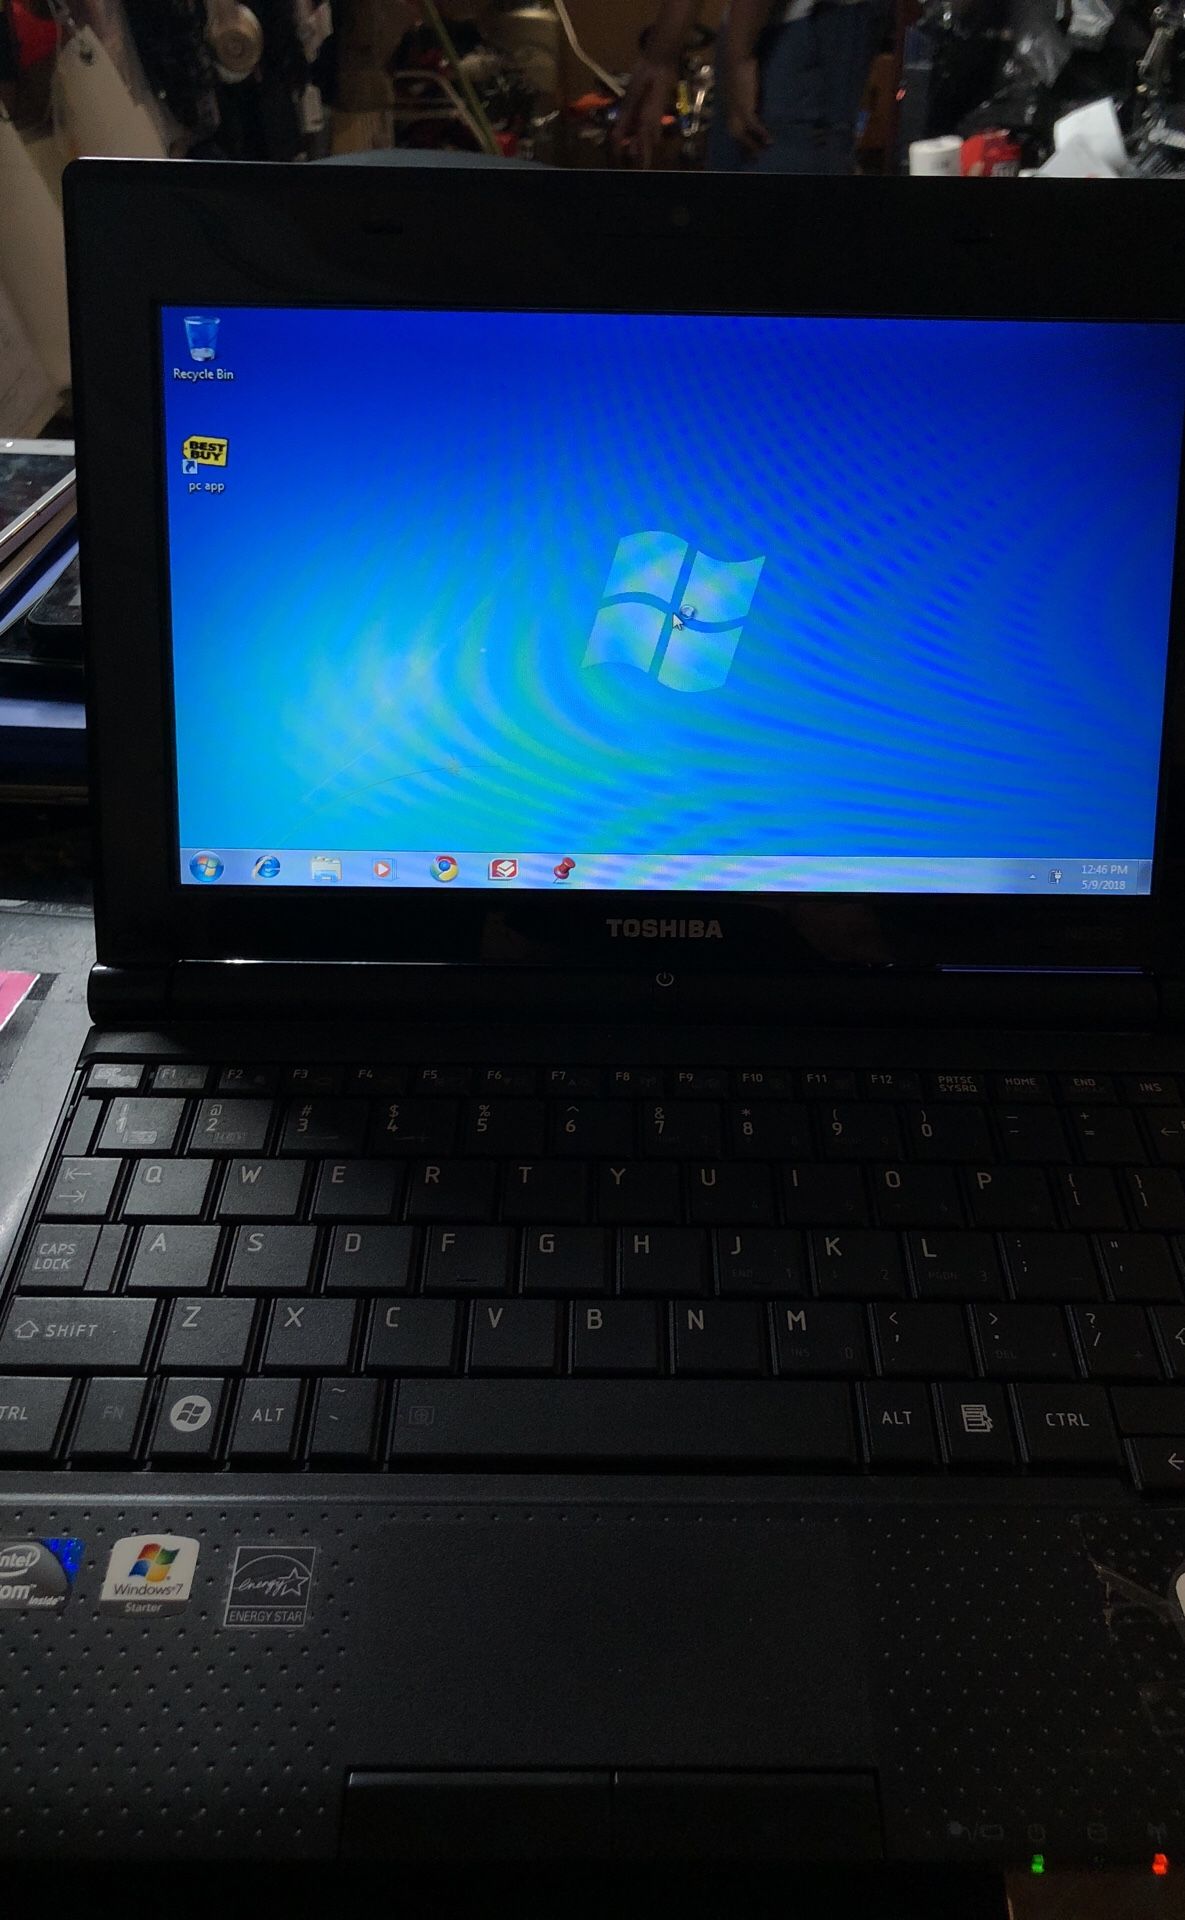 Toshiba Windows 7 Mini laptop no charger